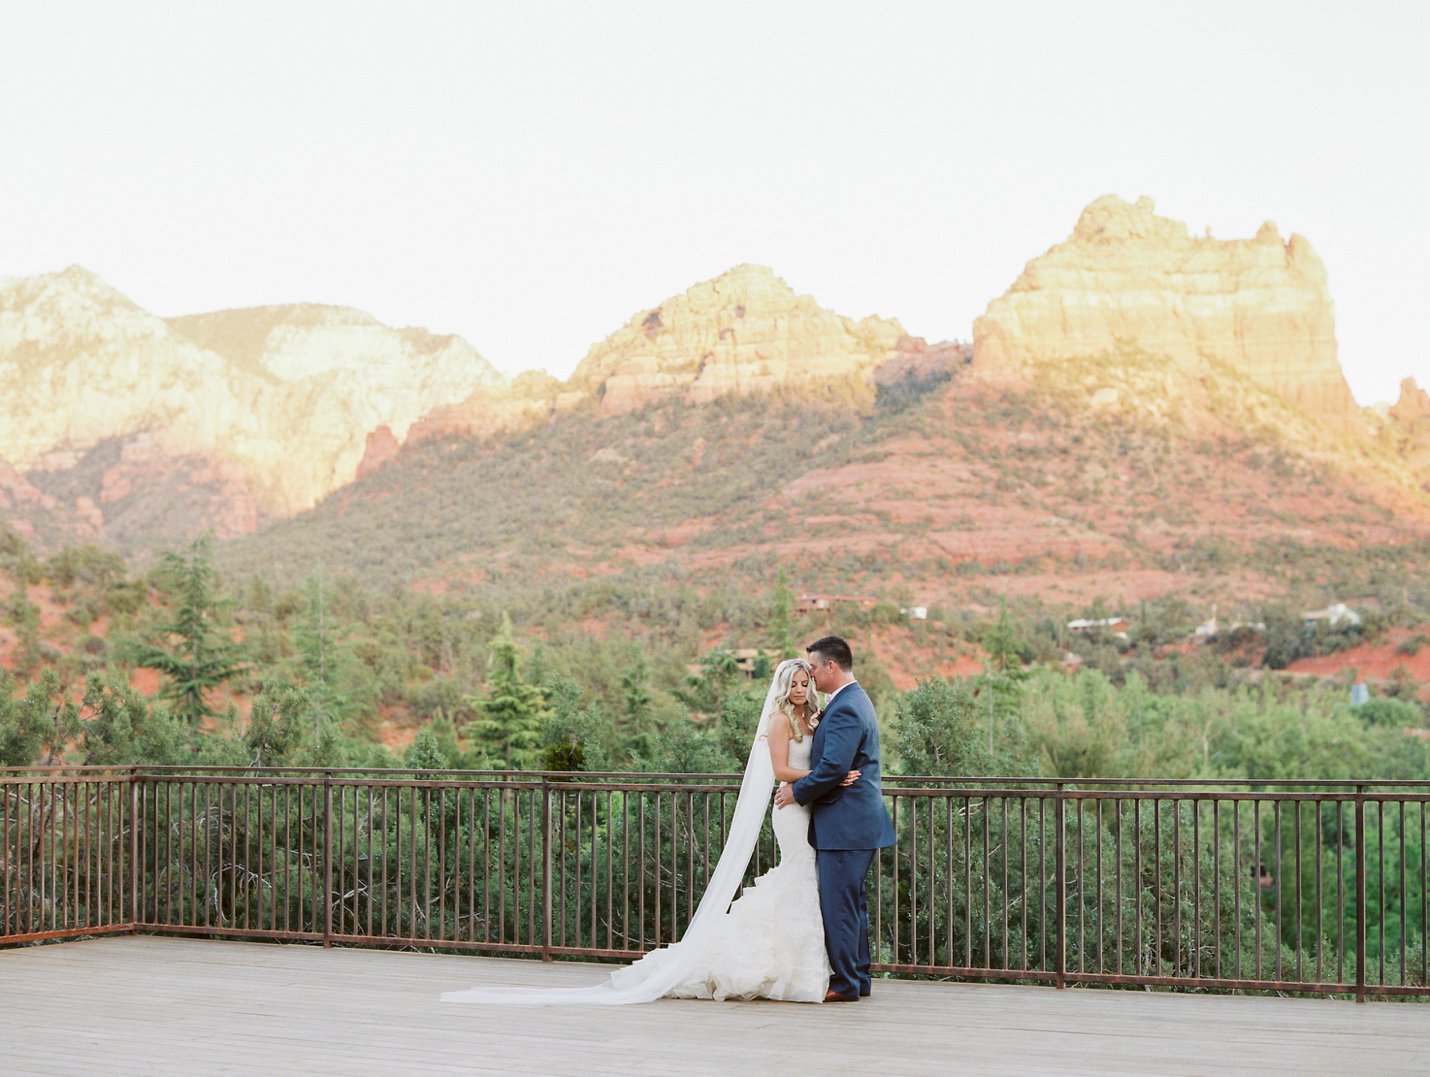 L'Auberge de Sedona wedding elopement - Rachel Solomon Photography